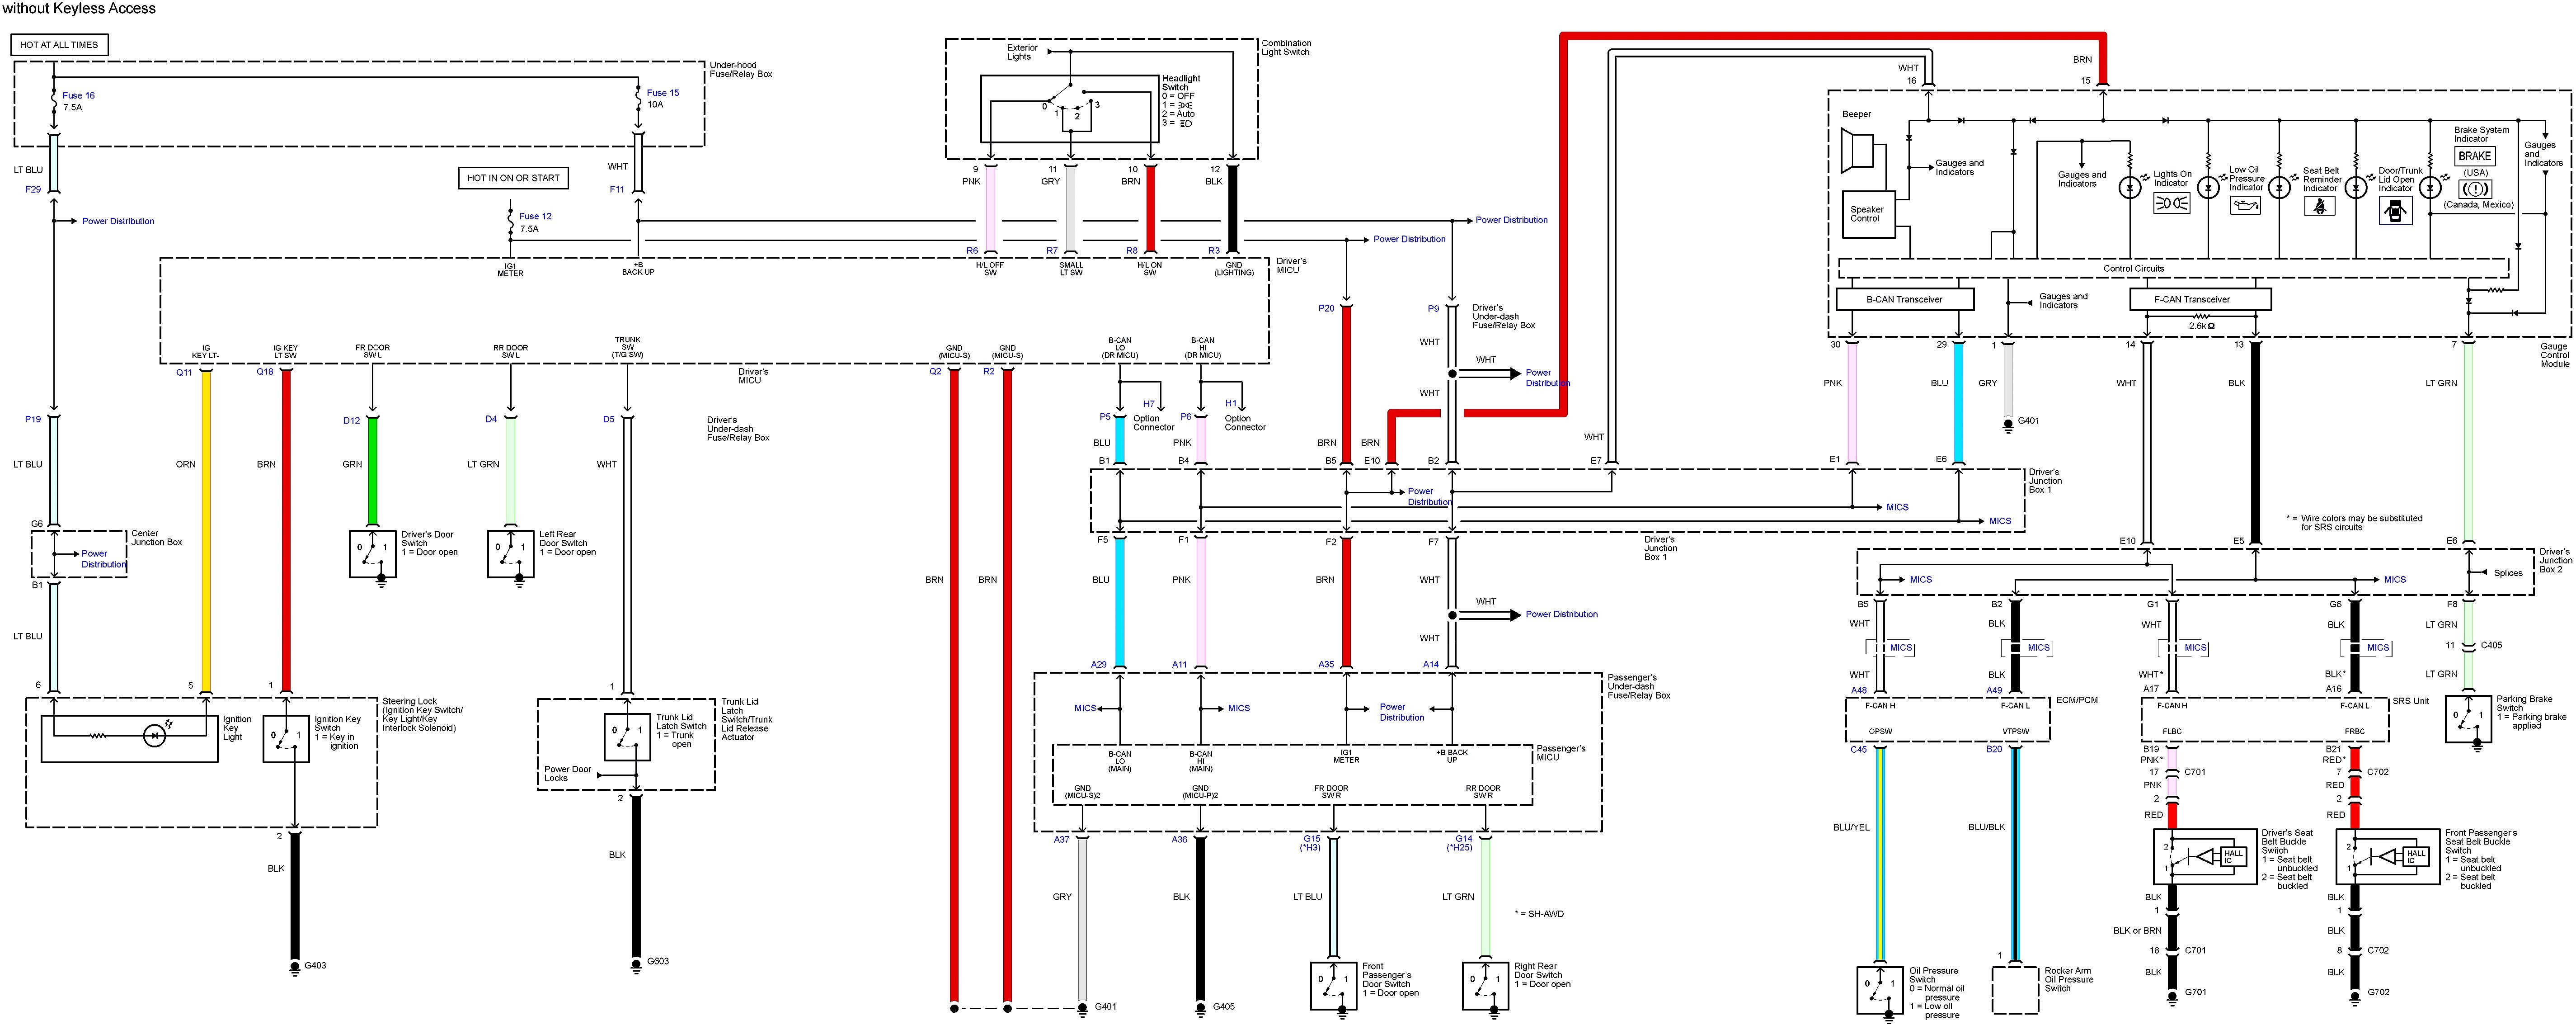 Mercedes Car Wiring Diagram Acura Tl 2013 – 2014 – Wiring Diagrams – Key Warning – Carknowledge Of Mercedes Car Wiring Diagram